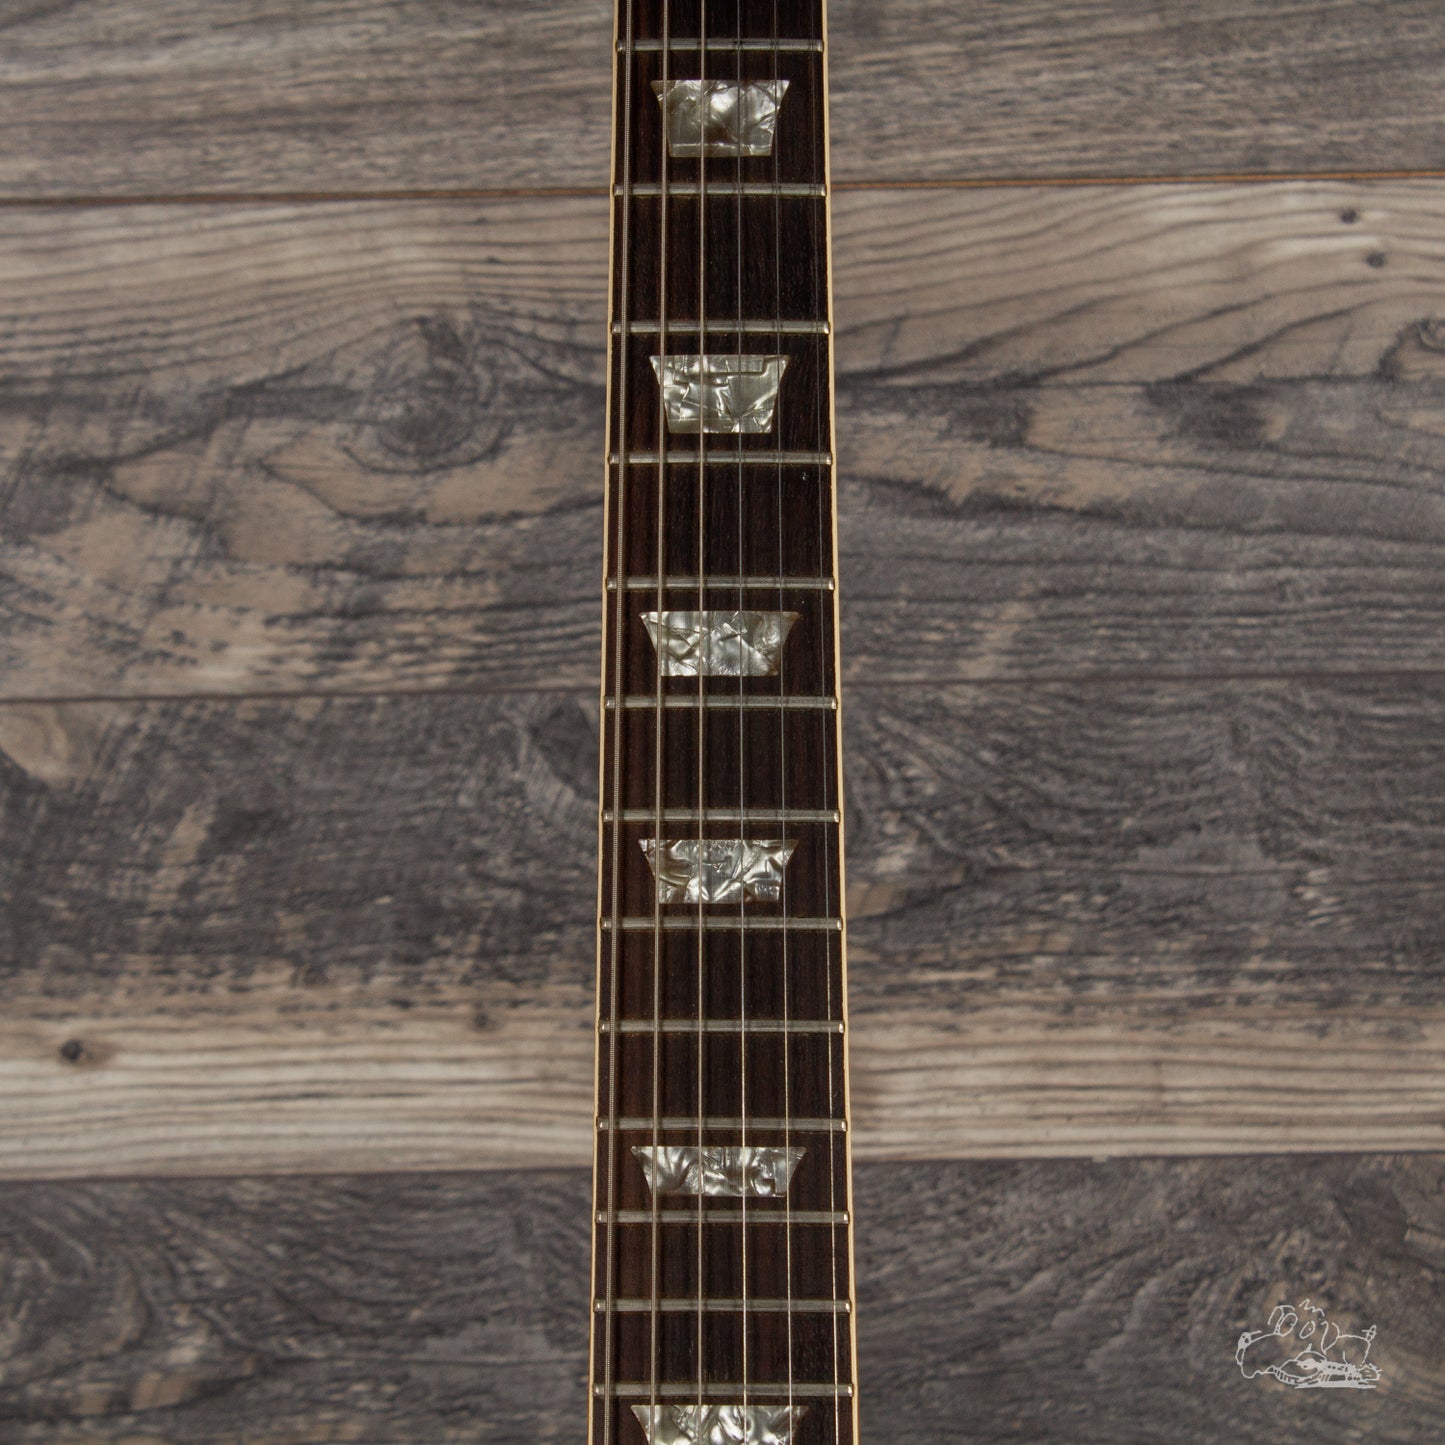 1968 Gibson Les Paul Goldtop